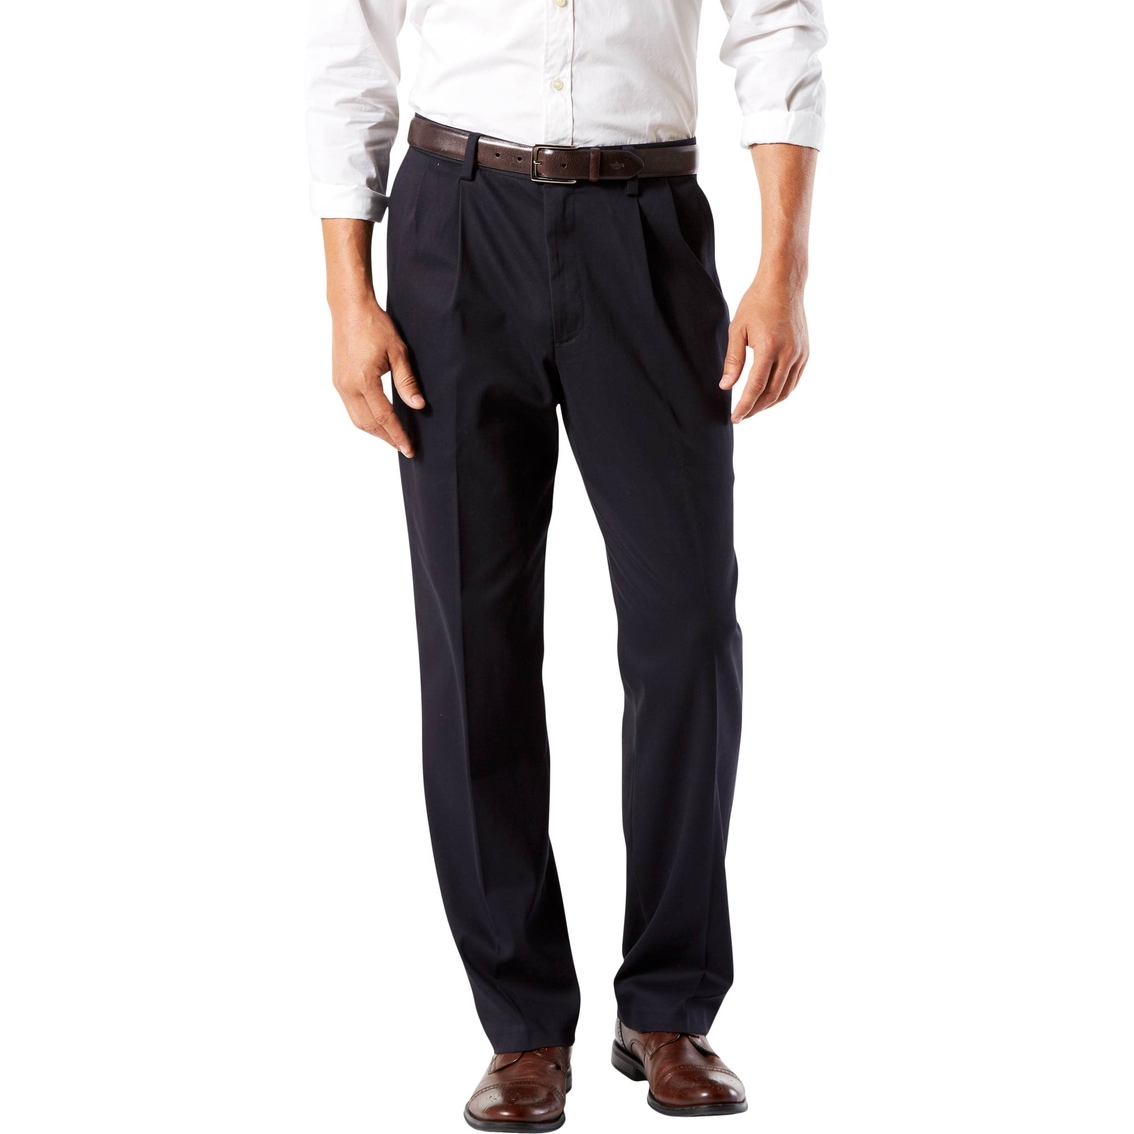 Dockers Easy Khaki Classic Fit Pants, Pleated D3 | Pants | Apparel ...